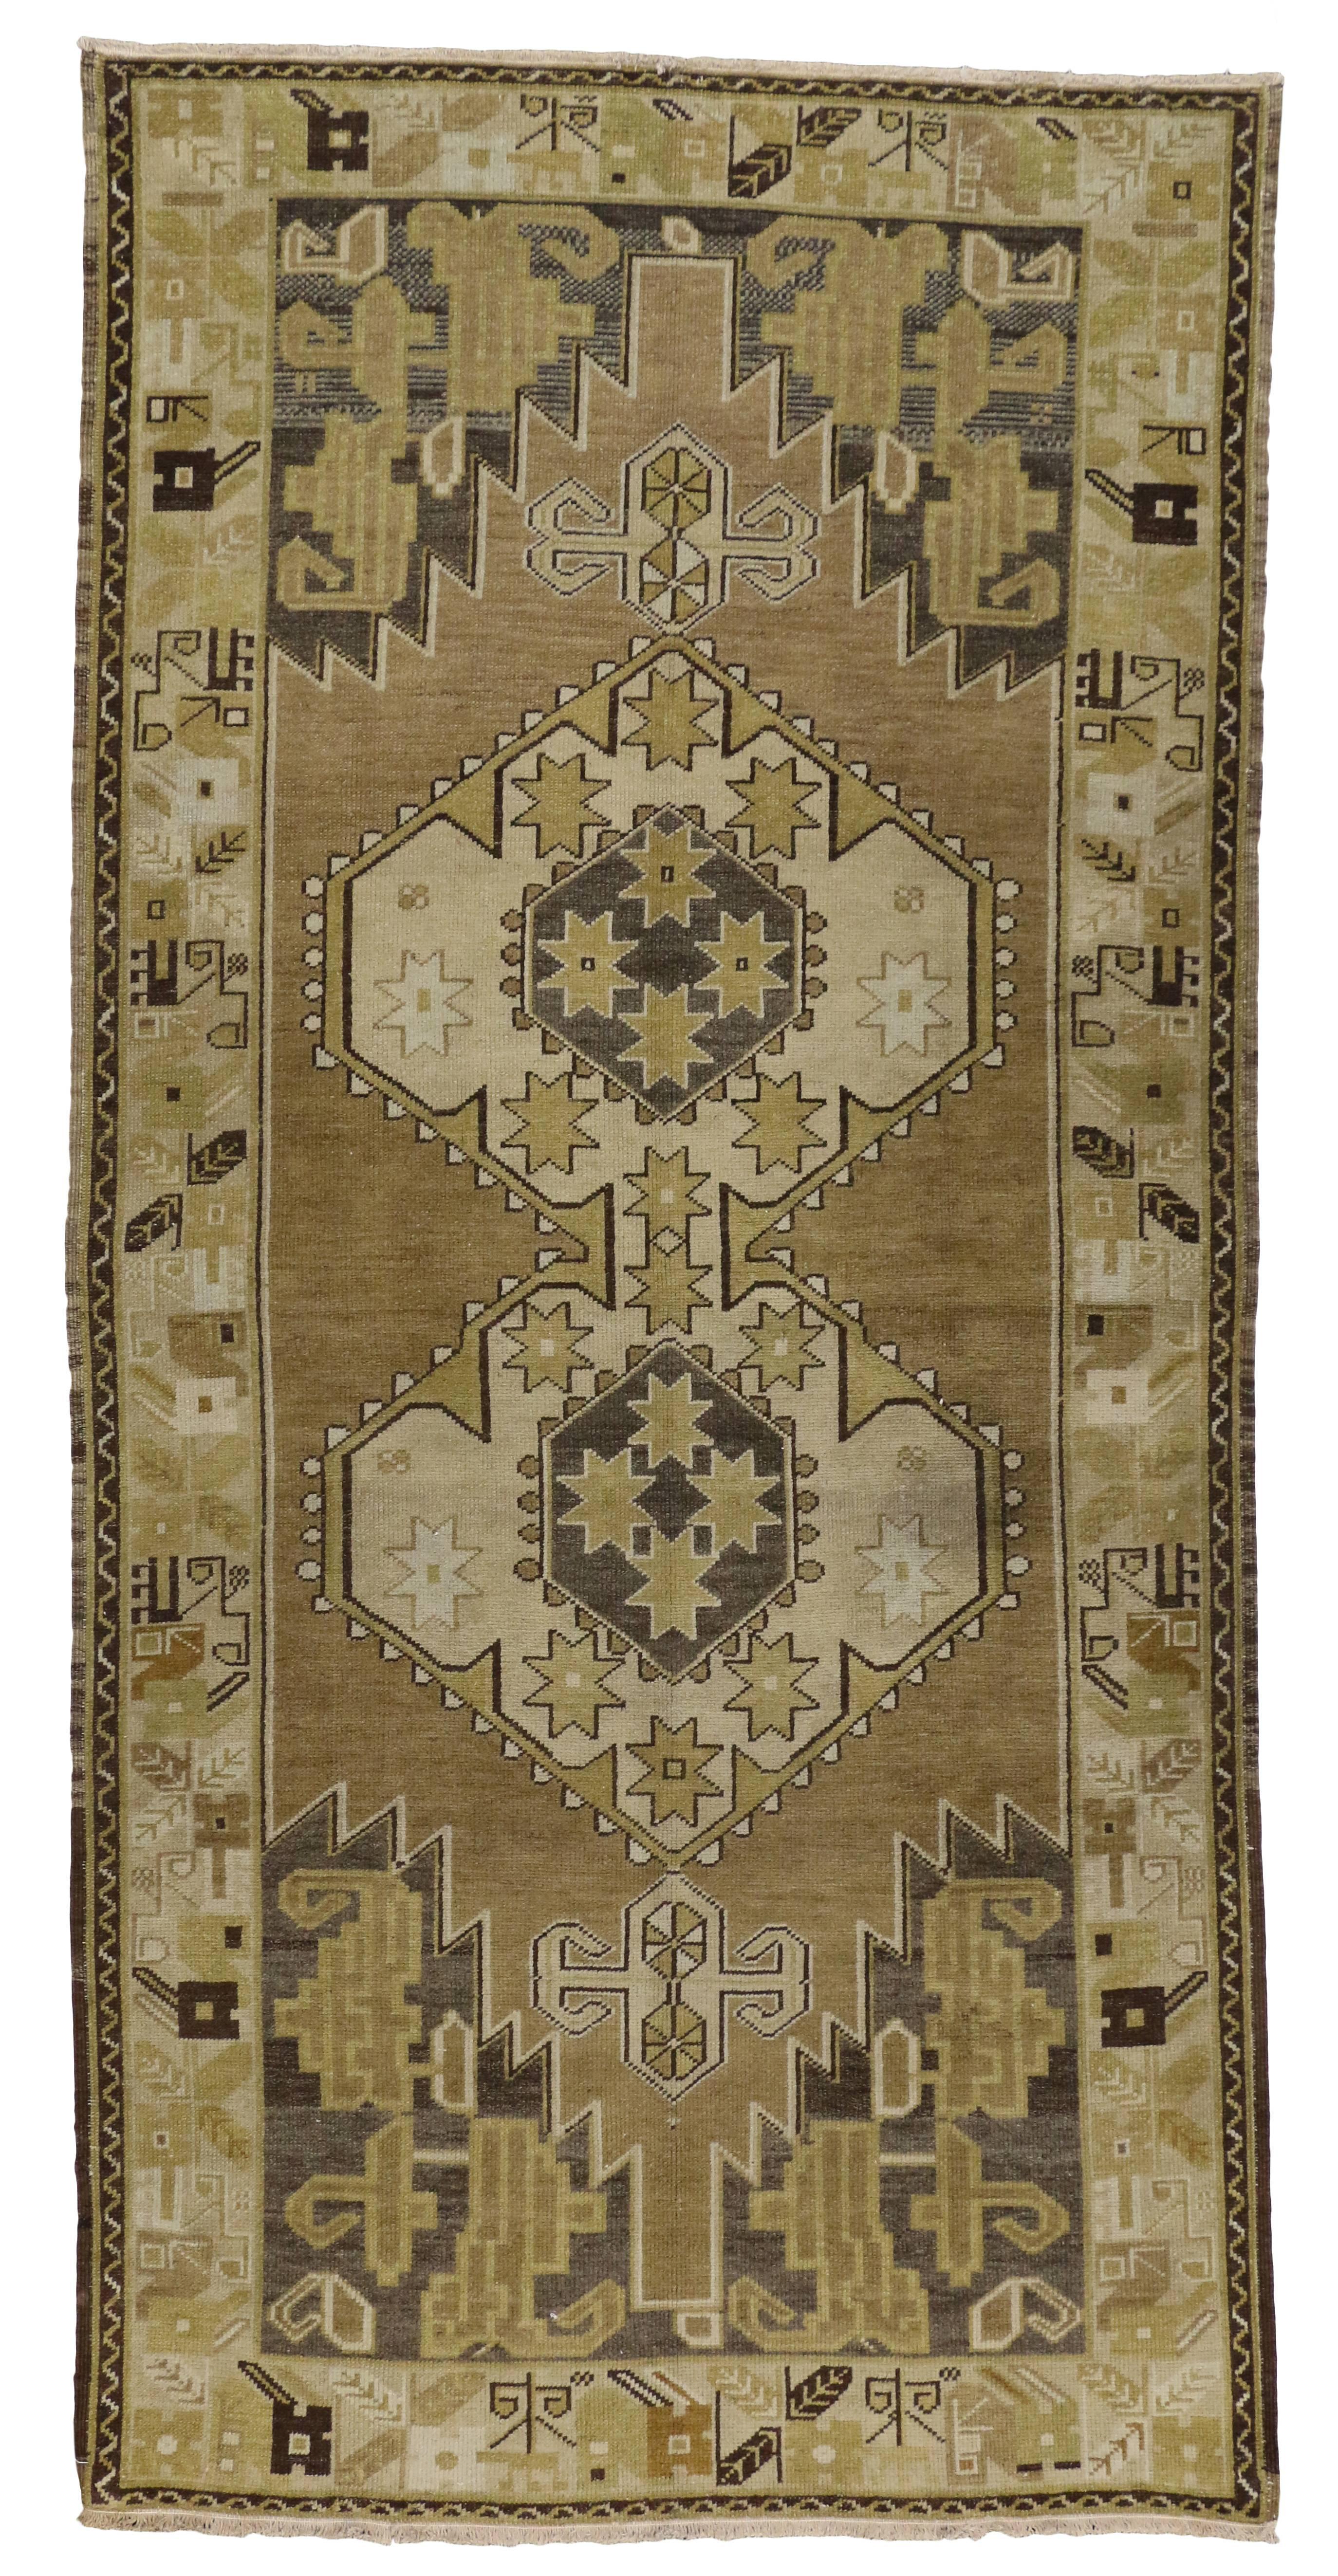 Wool Vintage Turkish Oushak Carpet Runner with Mid-Century Modern Style